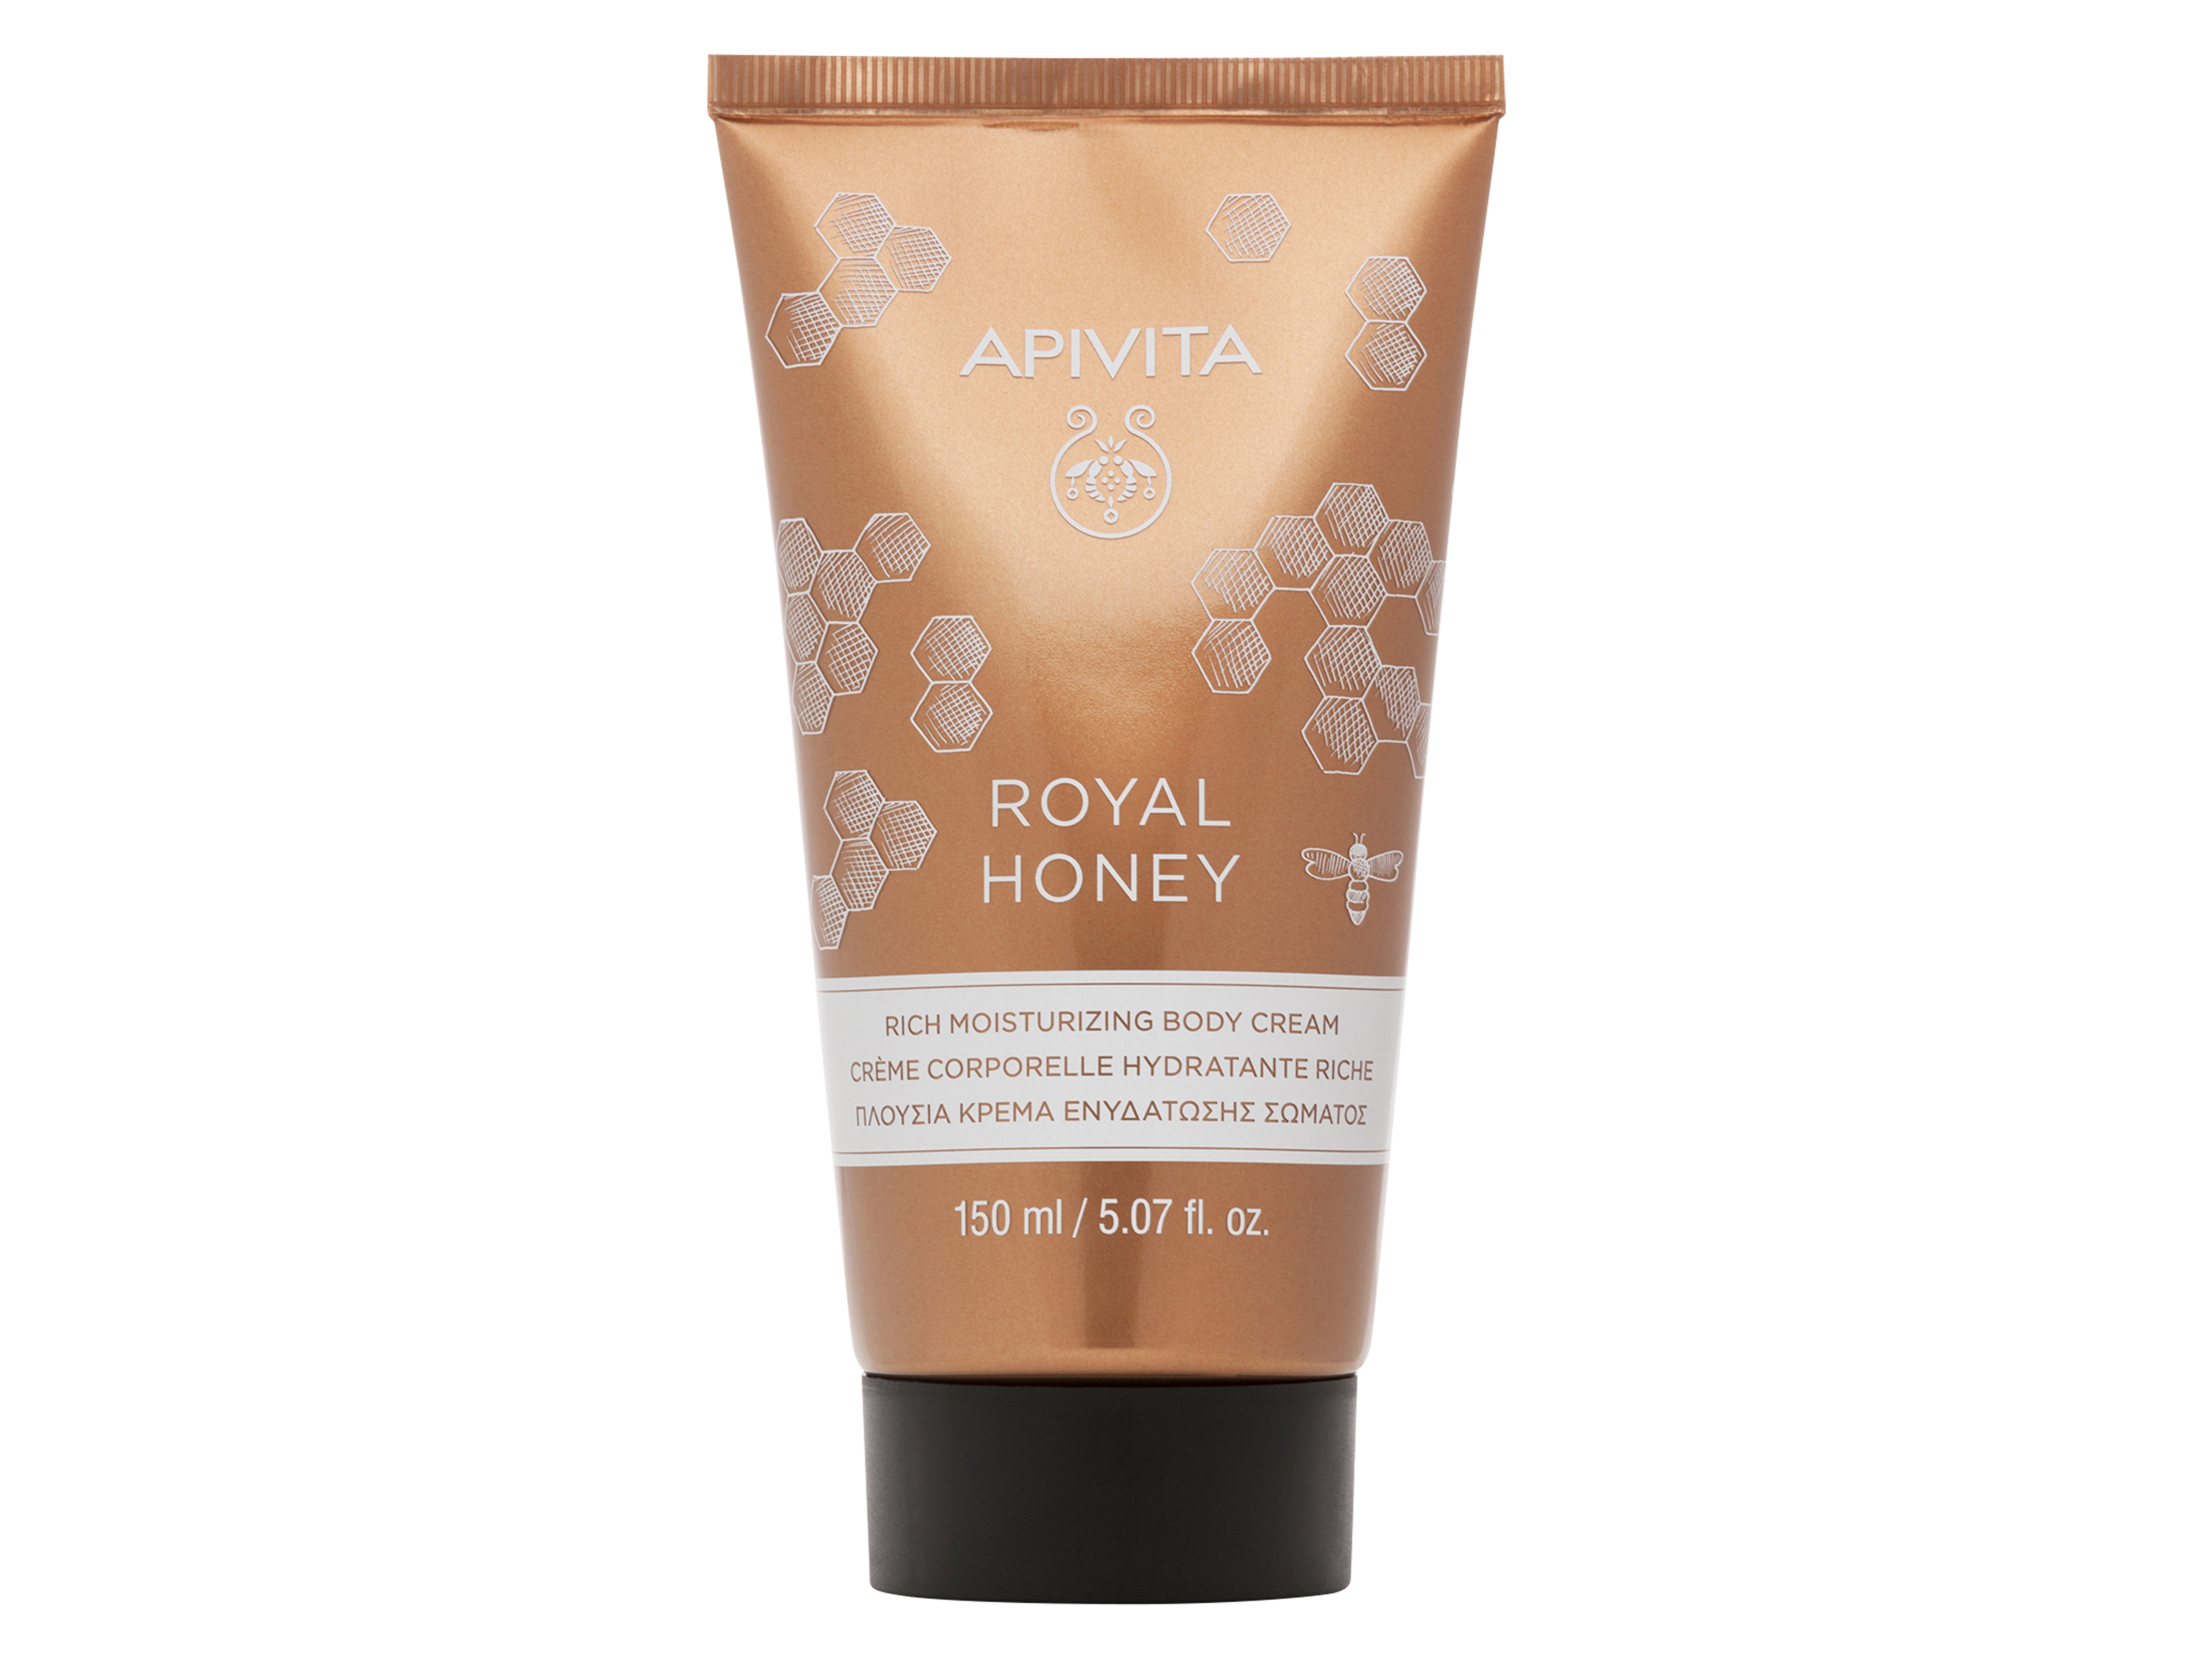 Apivita Royal Honey Body Cream, 150 ml